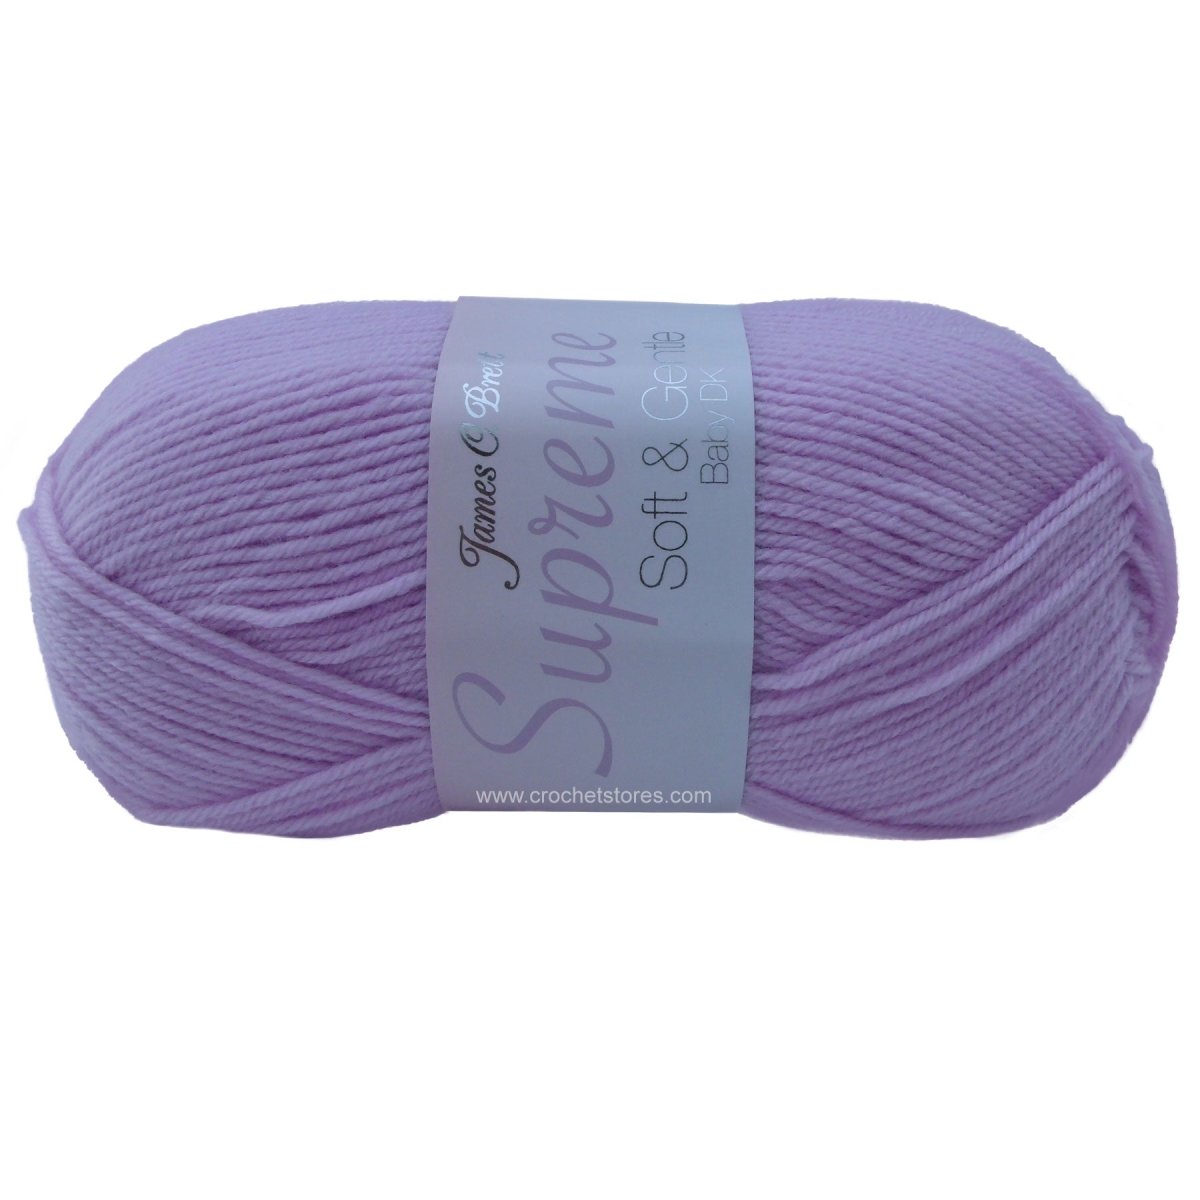 SUPREME BABY DK - CrochetstoresSNG35060019097502